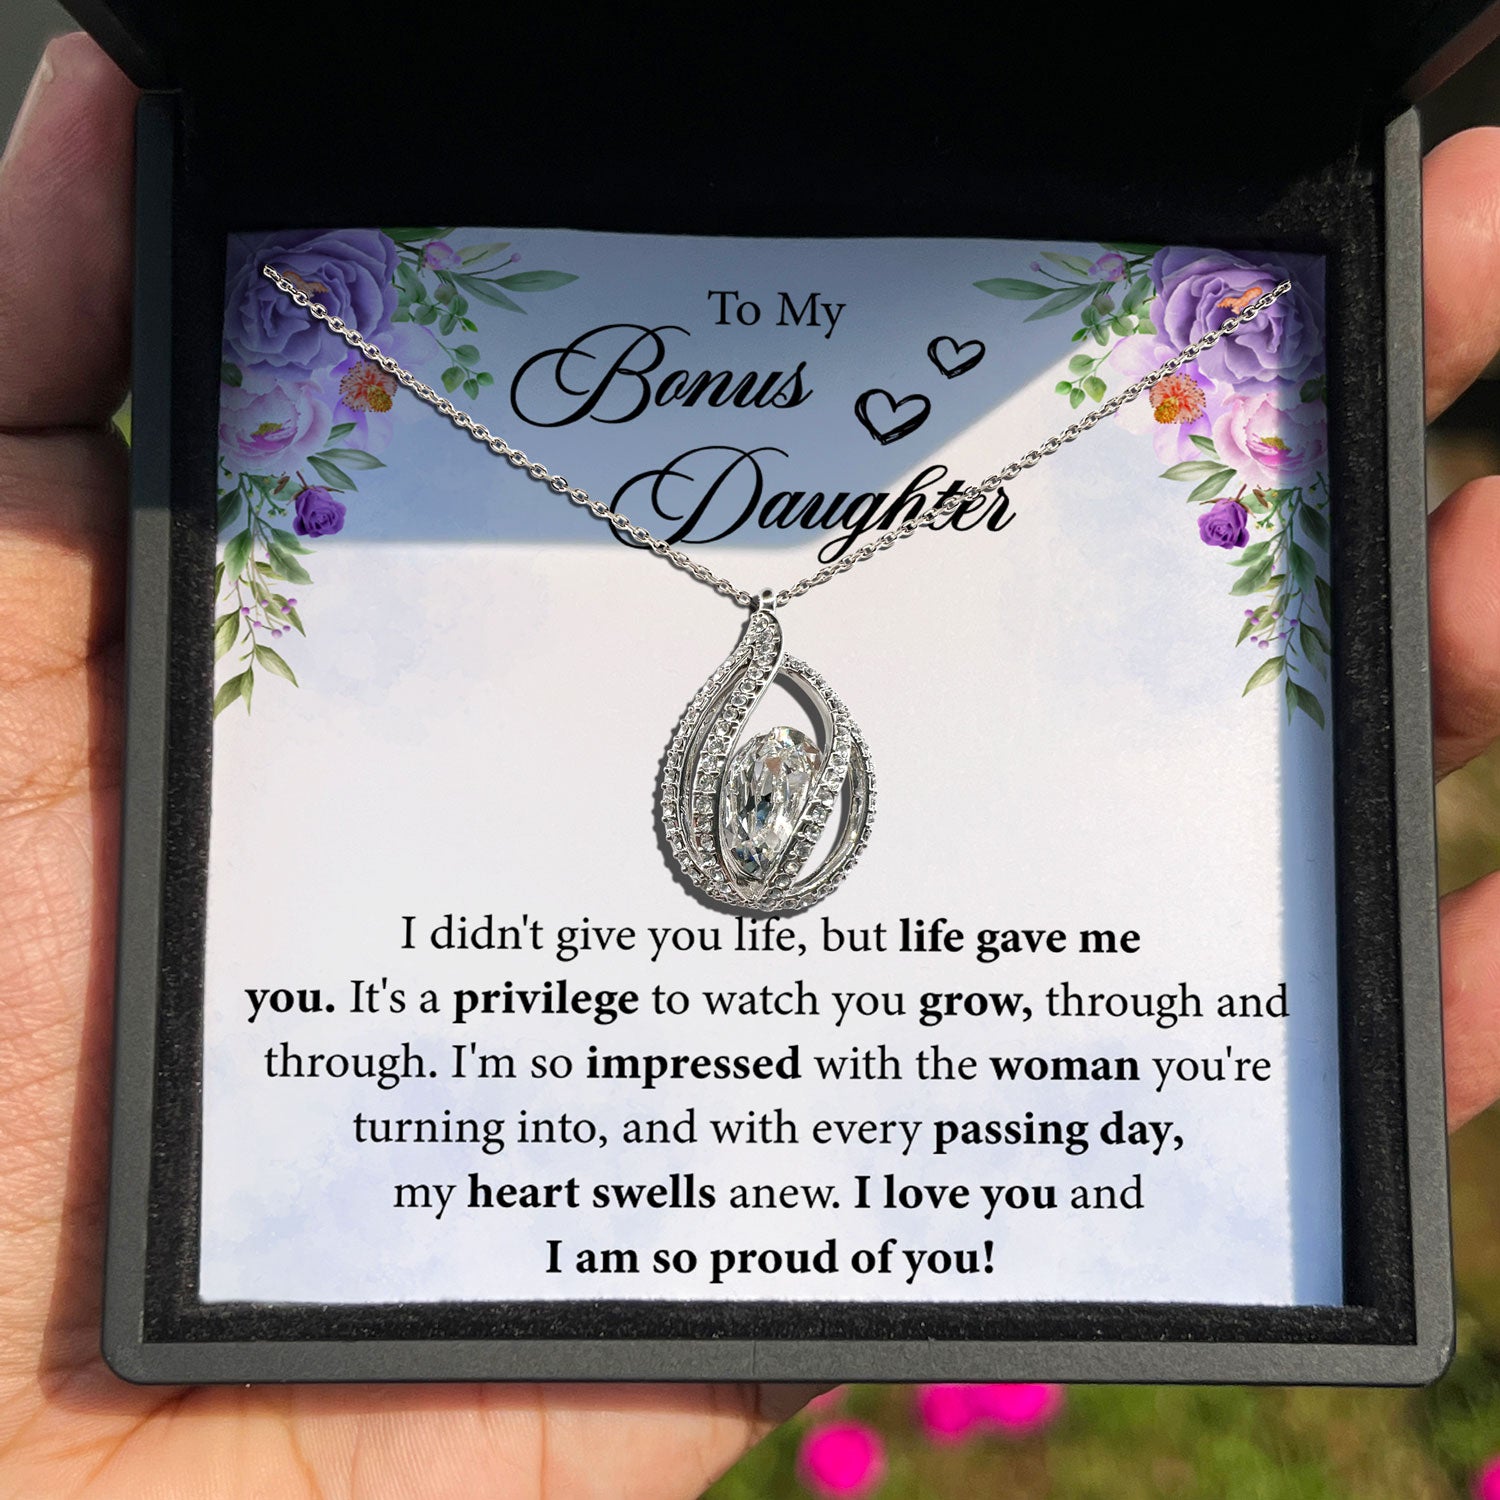 To My Bonus Daughter - Life Gave Me You - Orbital Birdcage Necklace